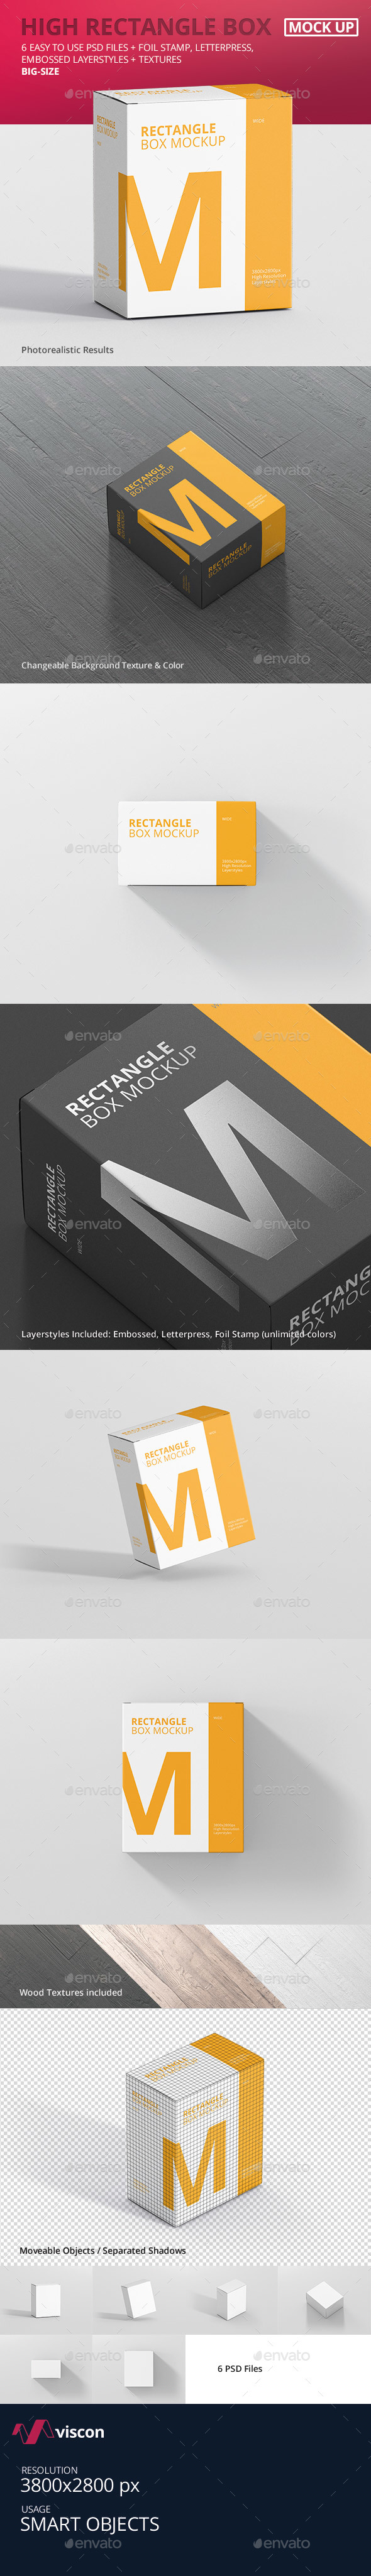 Rectangle Box Mockup Graphics Designs Templates